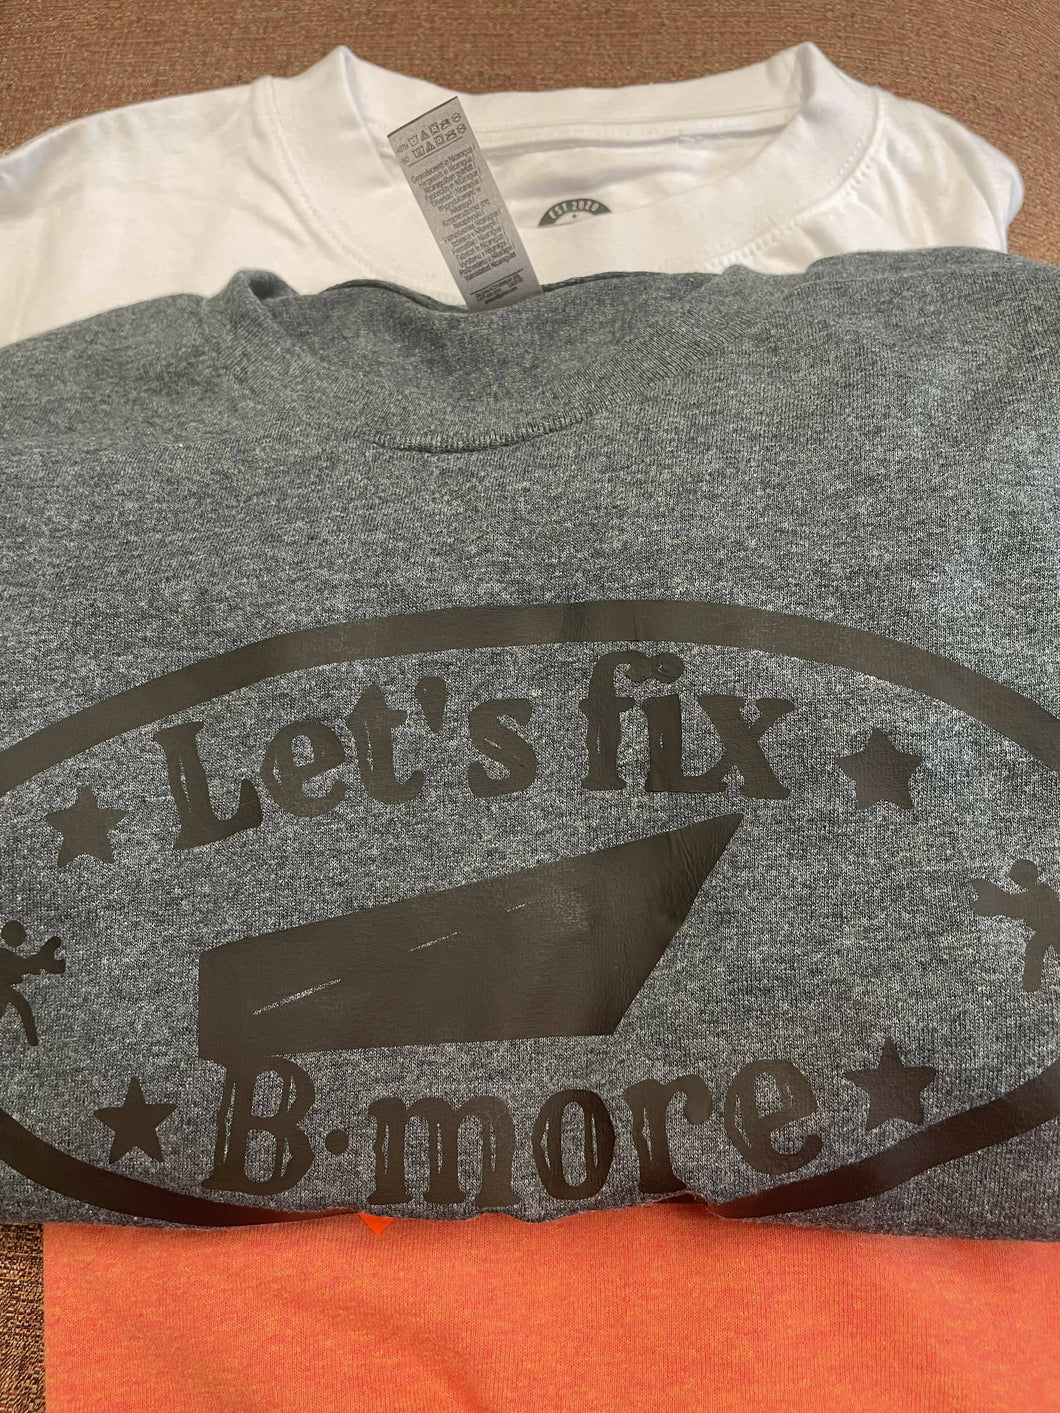 Let’s Fix Baltimore T-shirt